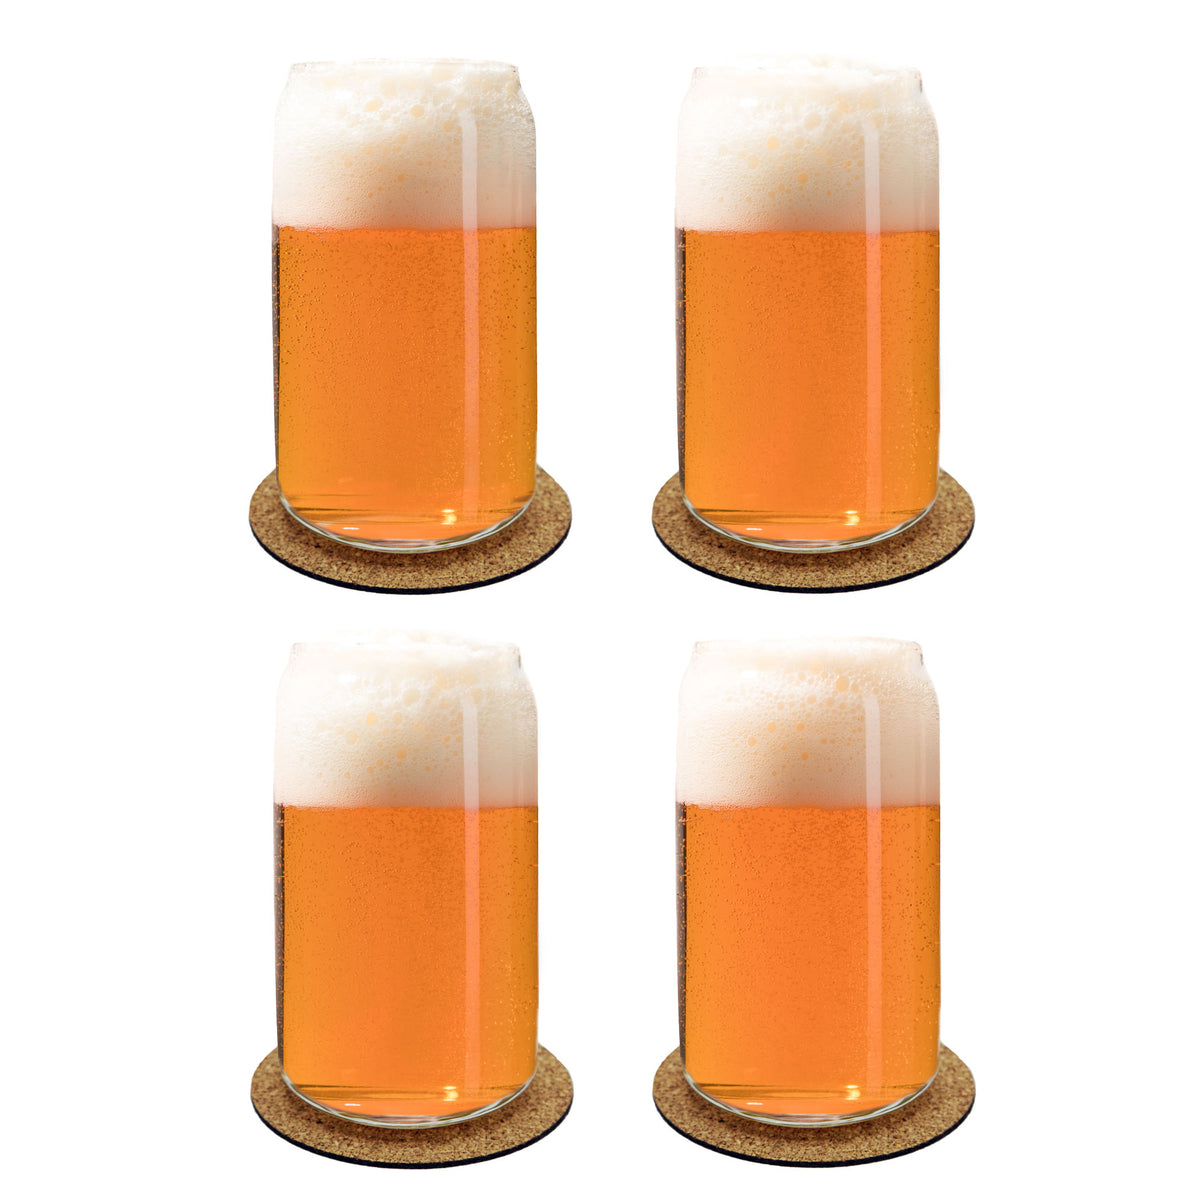 Looking for beer can shaped glassware : r/portlandbeer